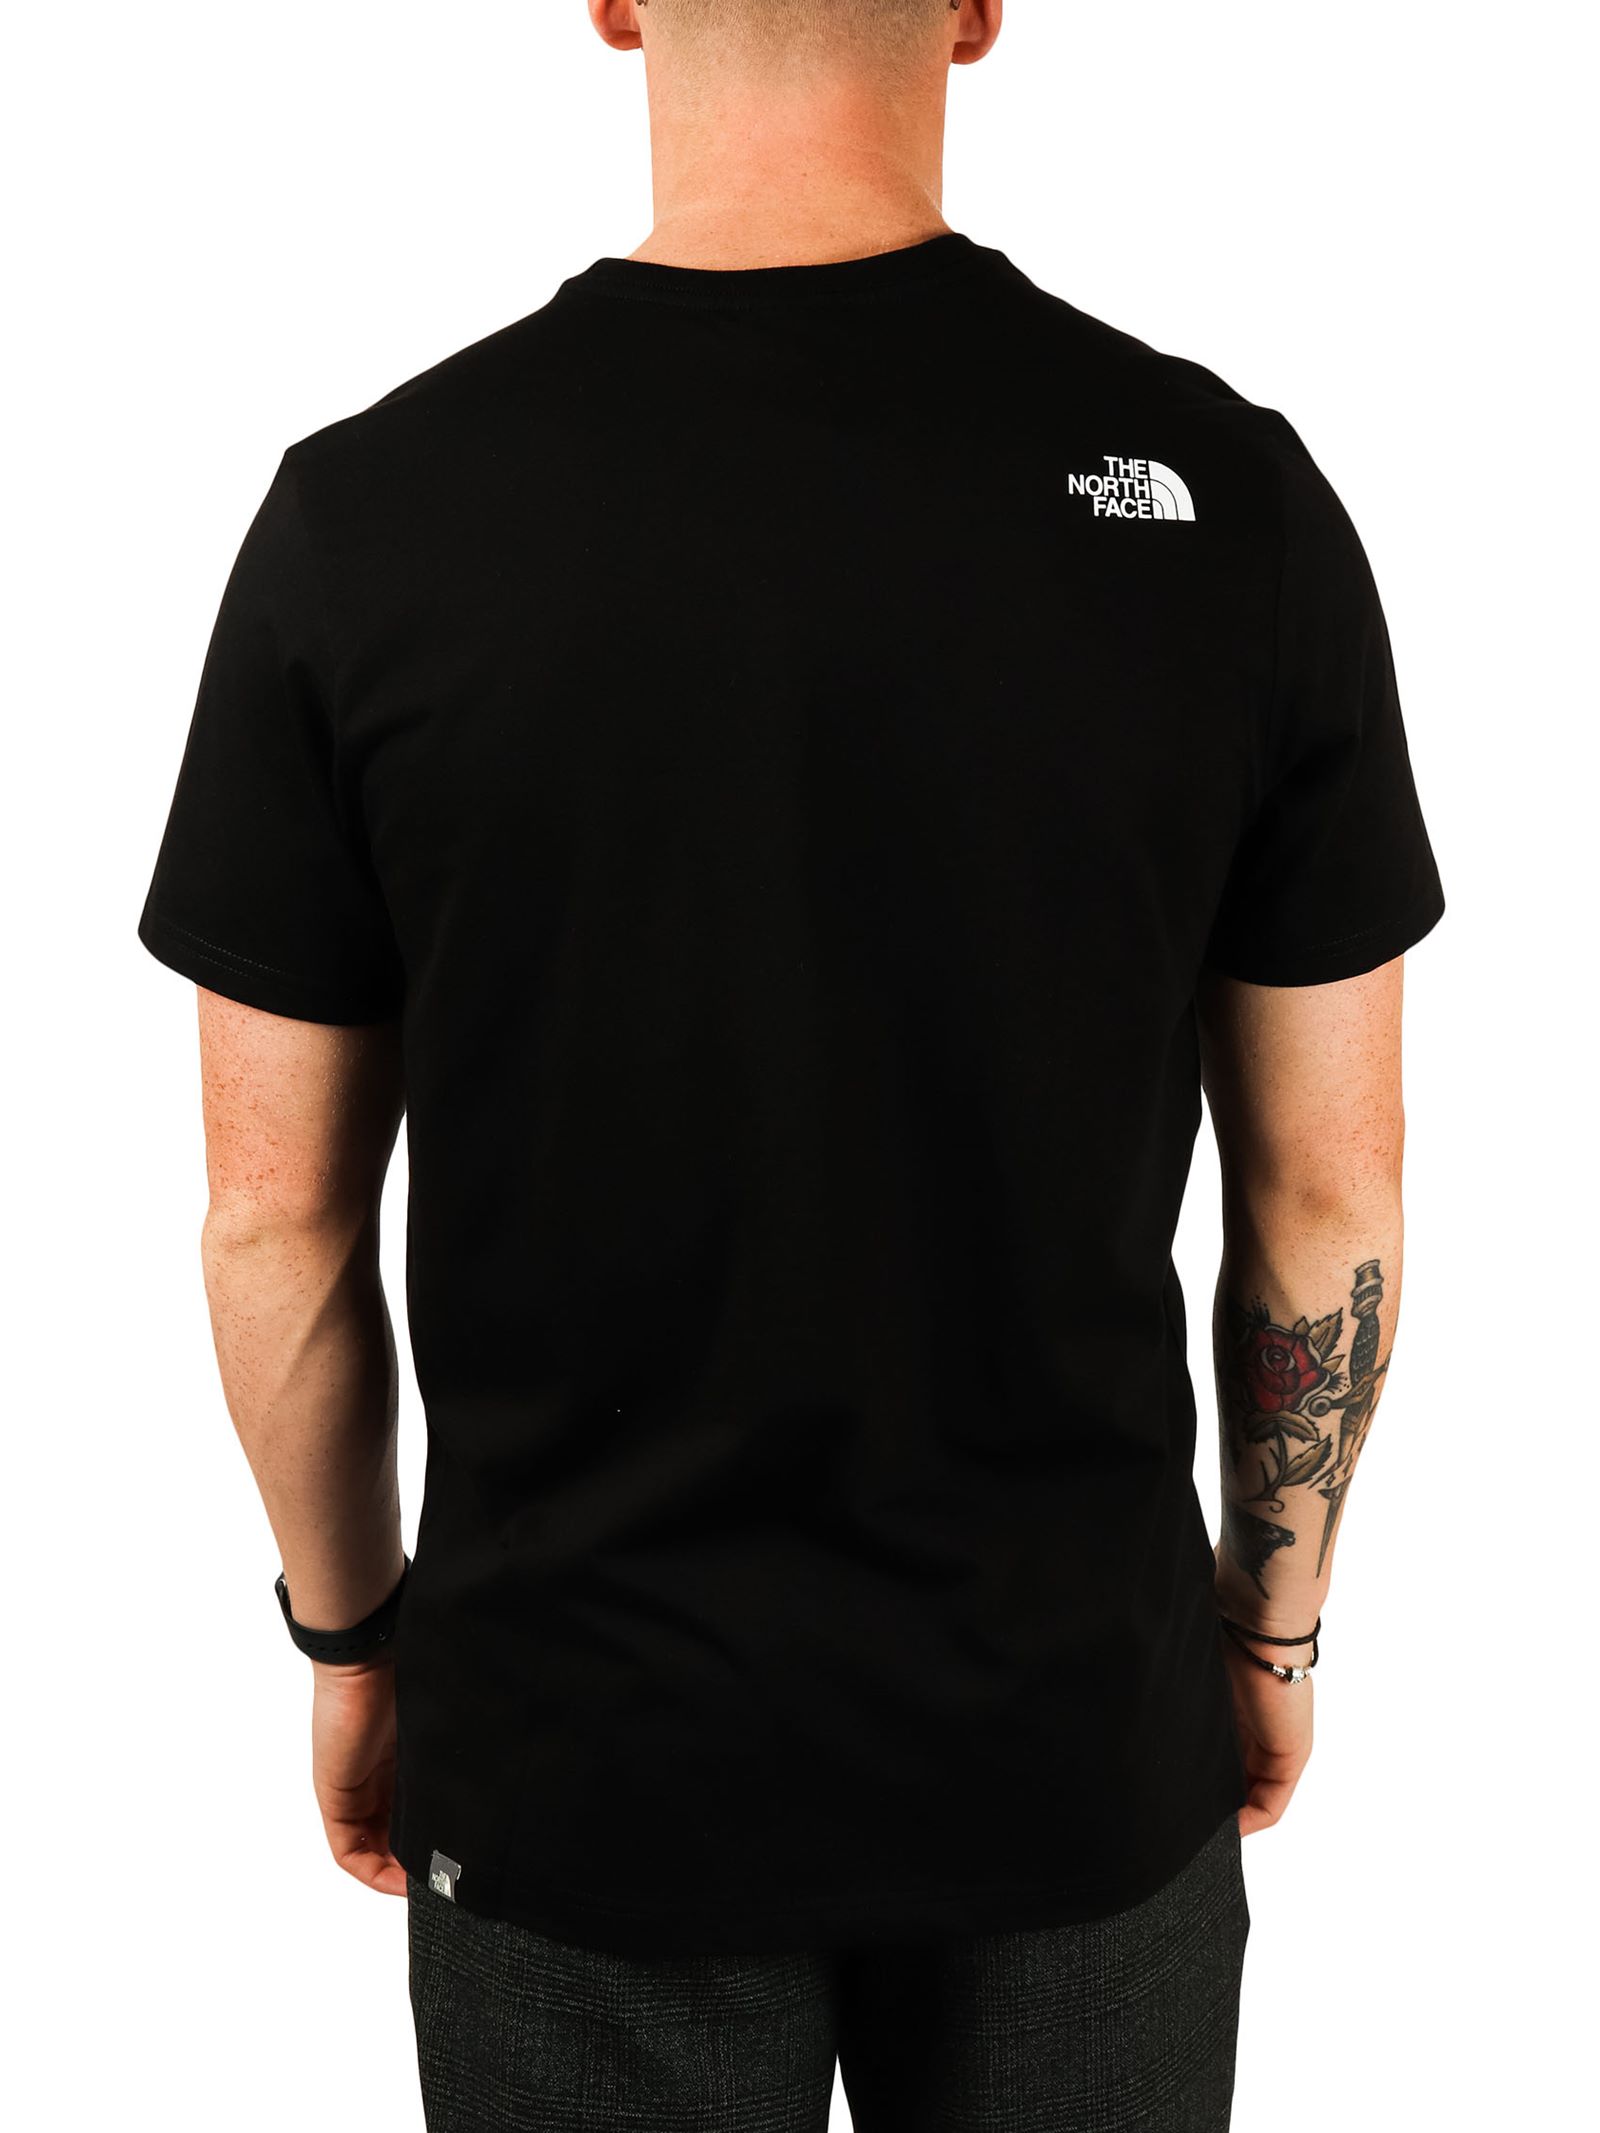 The North Face RGB Prism T-Shirt in TNF Black | Dapper Street